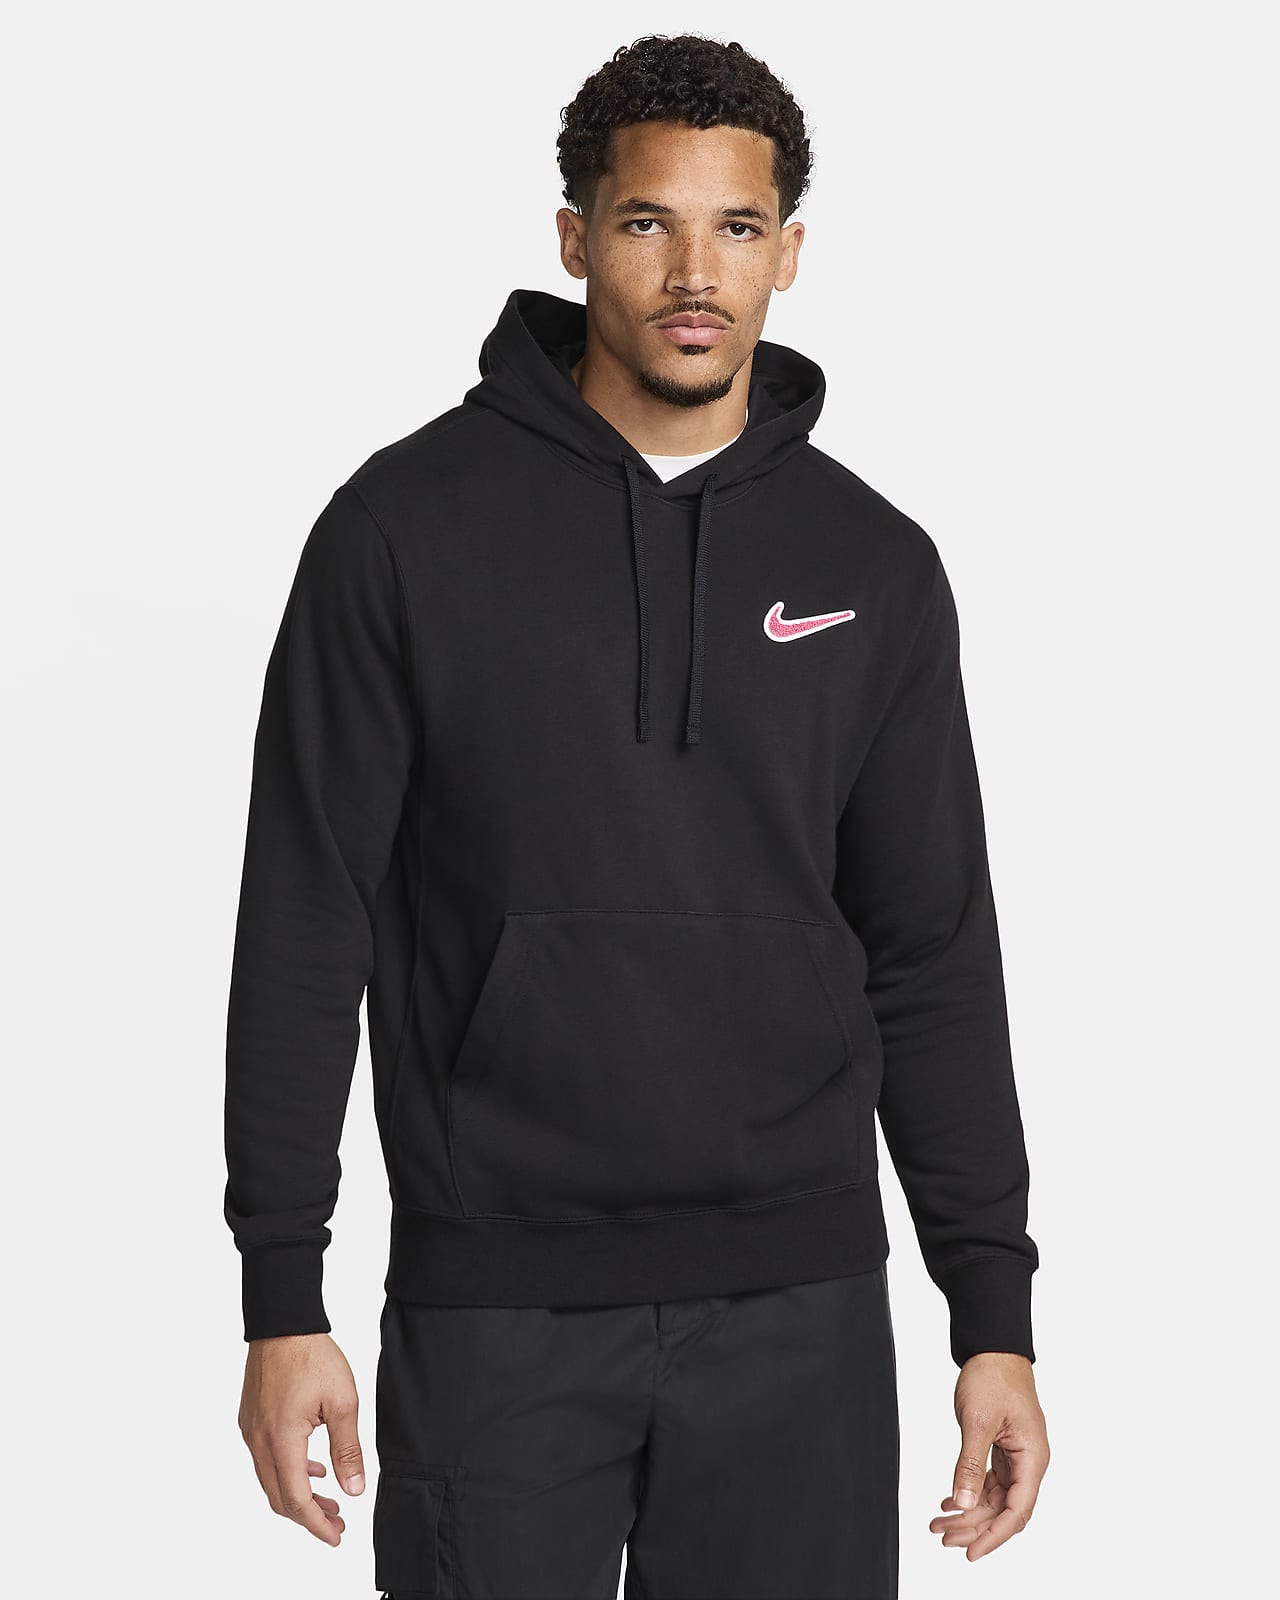 Black Sportswear Hoodie by Nike on Sale